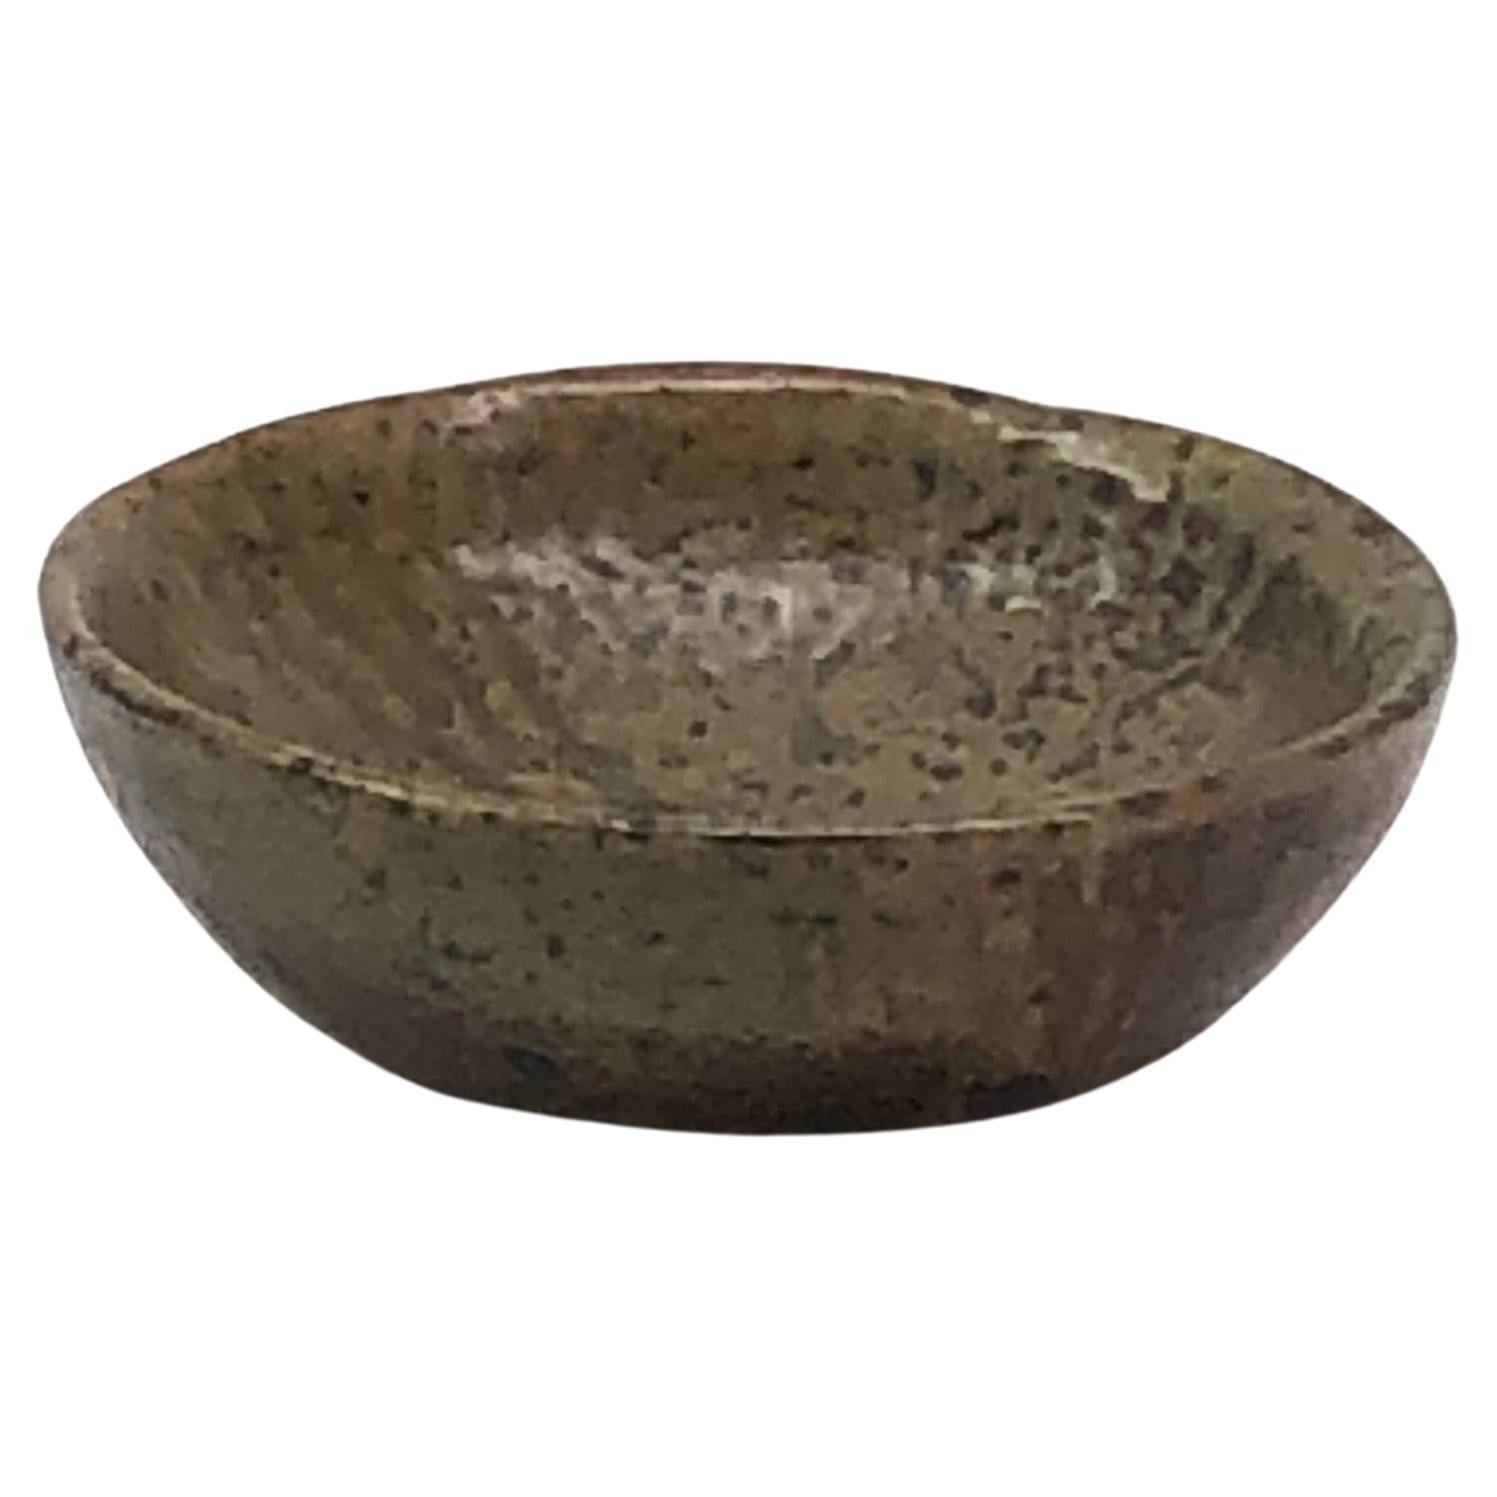 pyrity sandstone bowl by Elisabeth Joulia For Sale